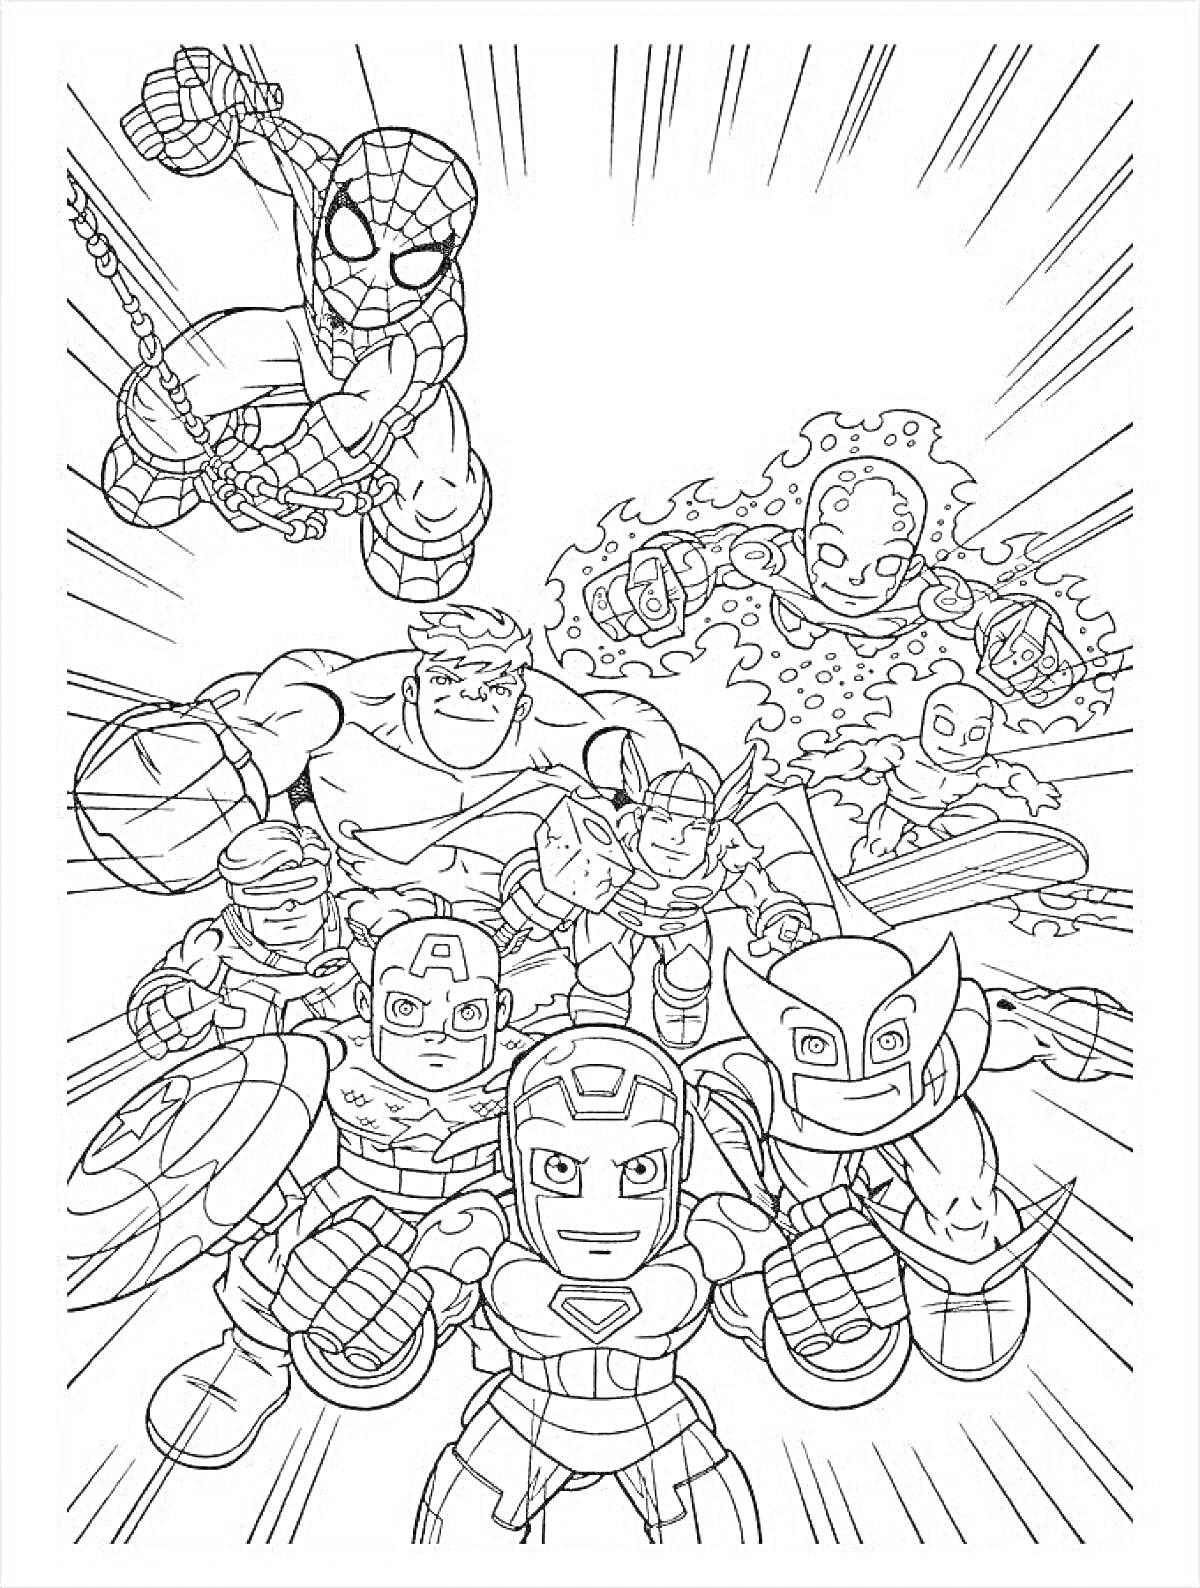 На раскраске изображено: Супергерои, Комиксы, Человек-паук, Железный Человек, Капитан Америка, Росомаха, Тор, Халк, Человек-факел, Команда